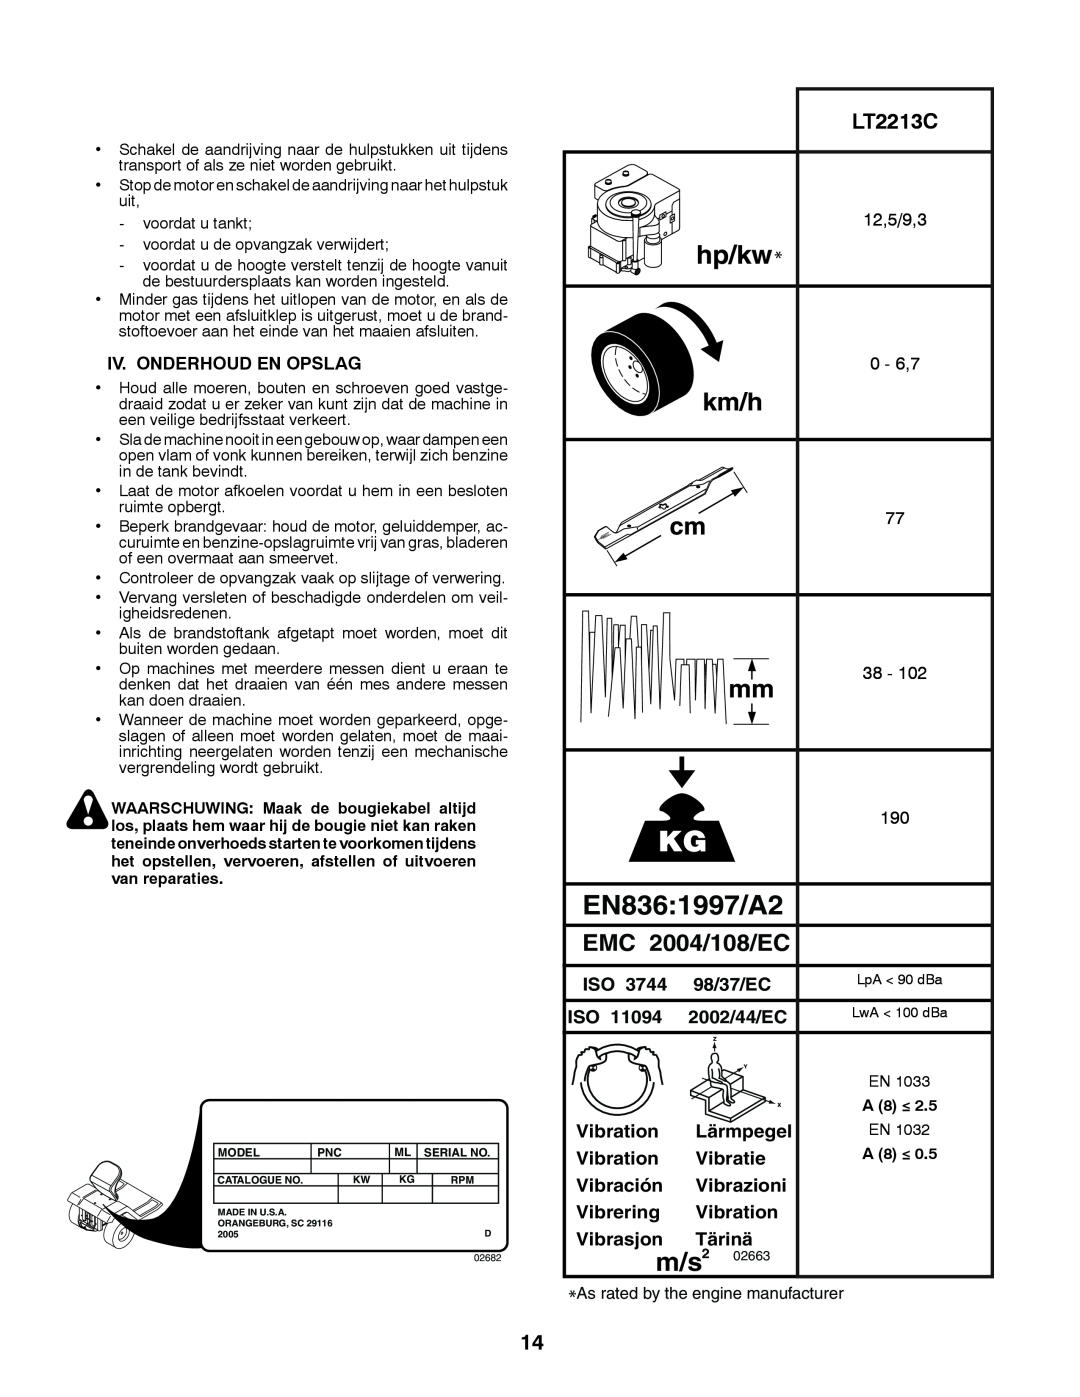 Jonsered LT2213C instruction manual EN836:1997/A2, m/s2, EMC 2004/108/EC 